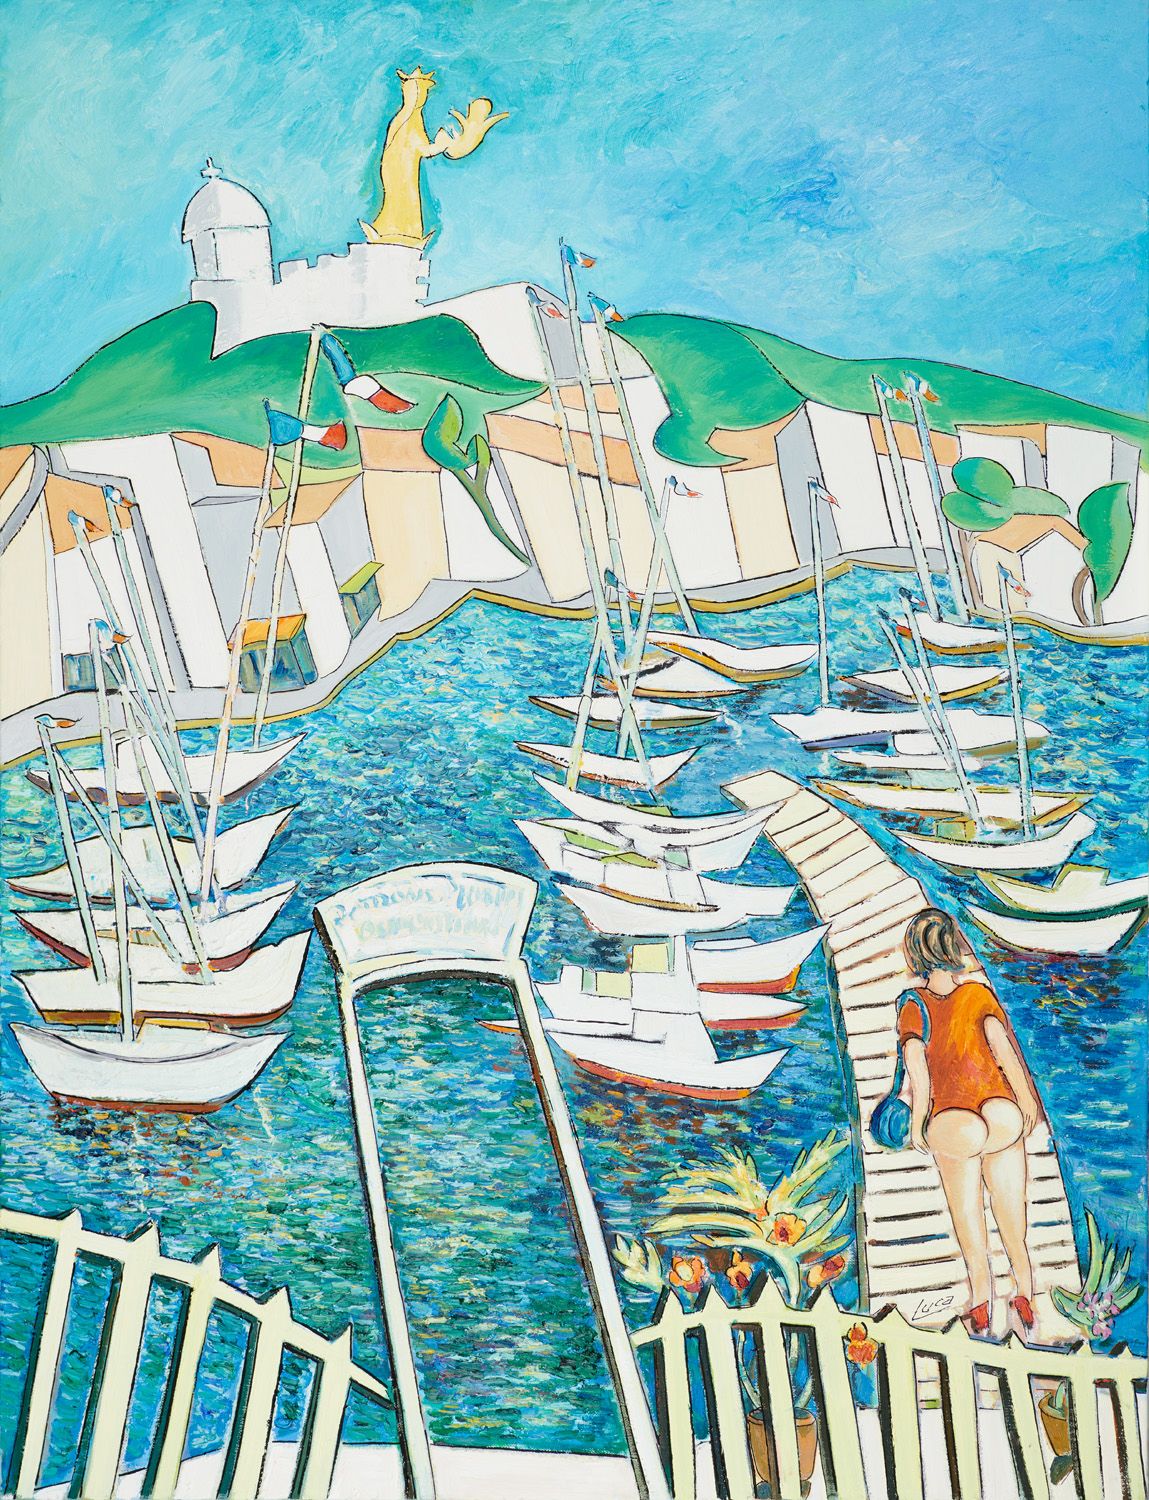 Null 克劳德-卢卡，生于1939年

马赛老港

布面油画，右下角有签名

116 x 89